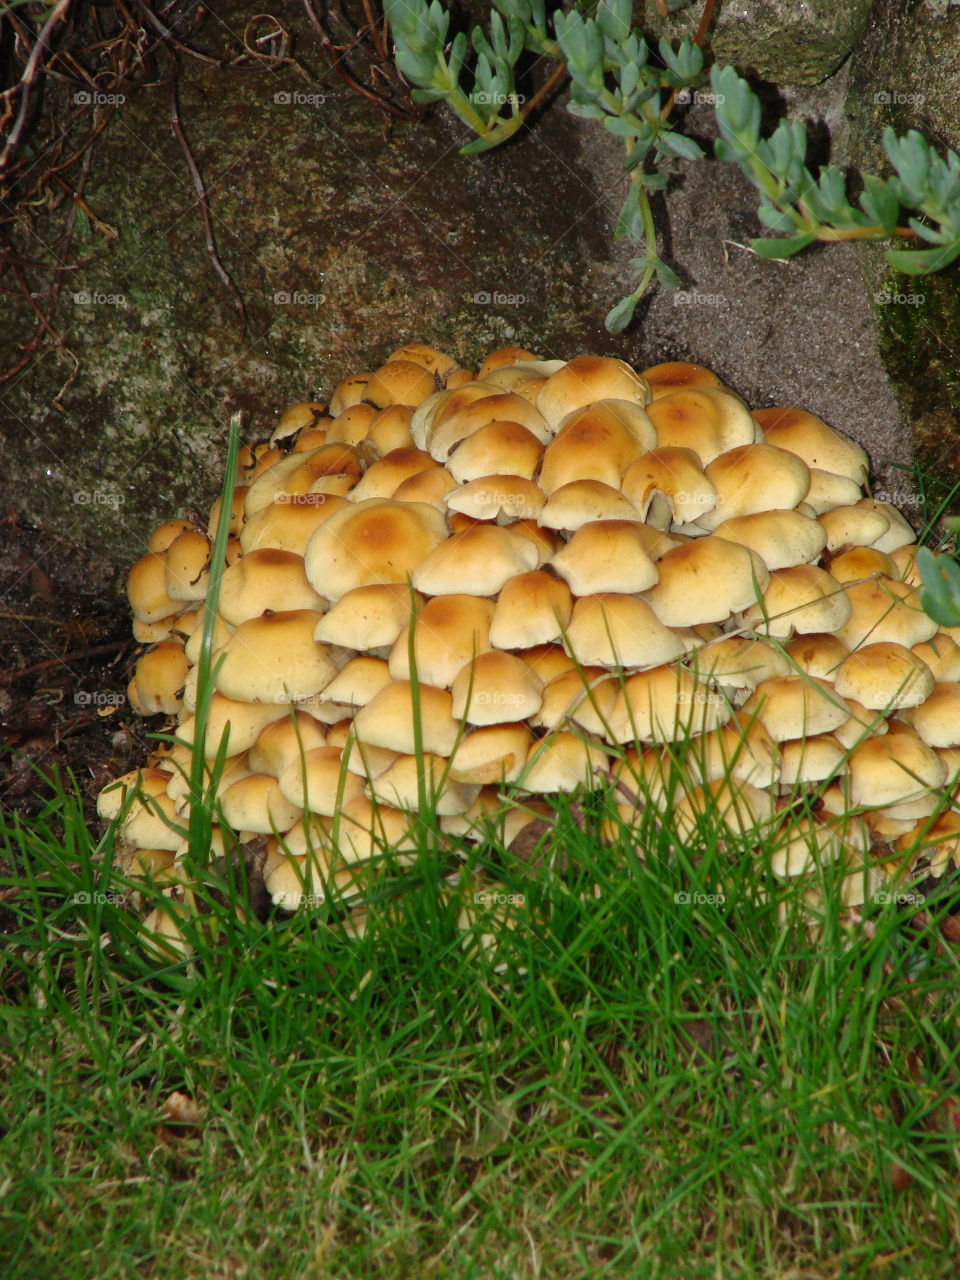 Mushrooms in England 